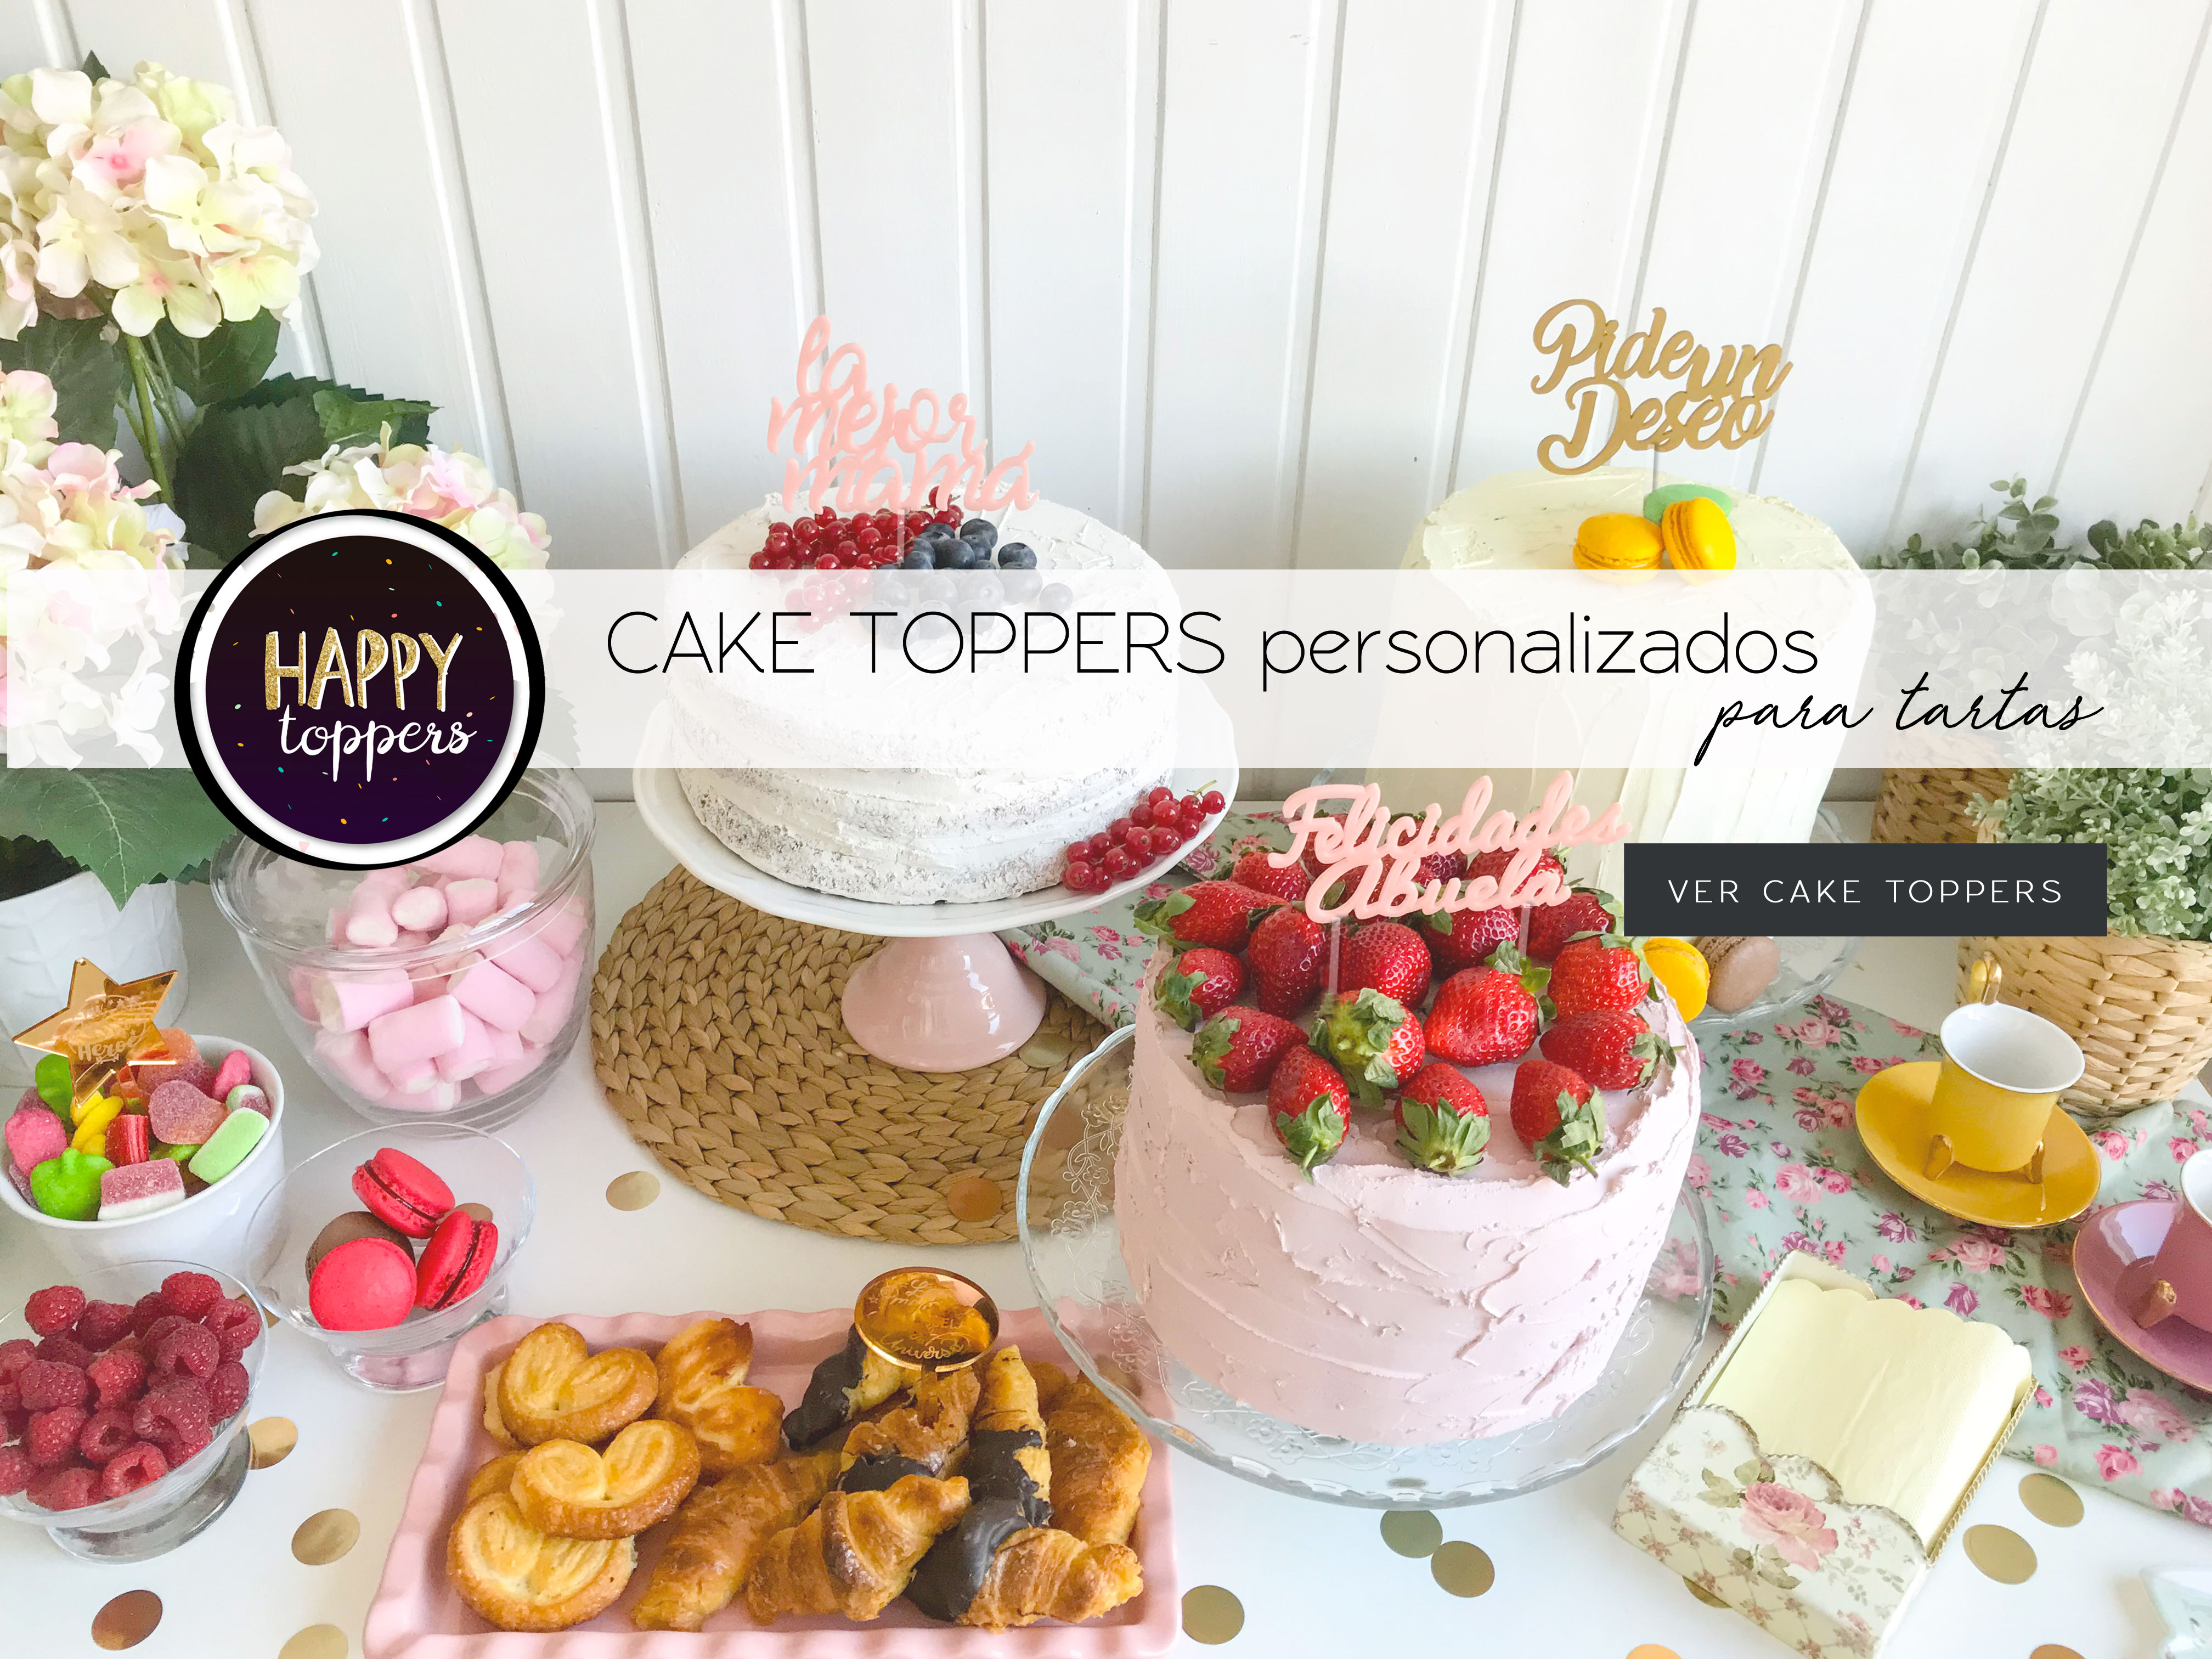 Cake toppers personalizados para decorar fiestas